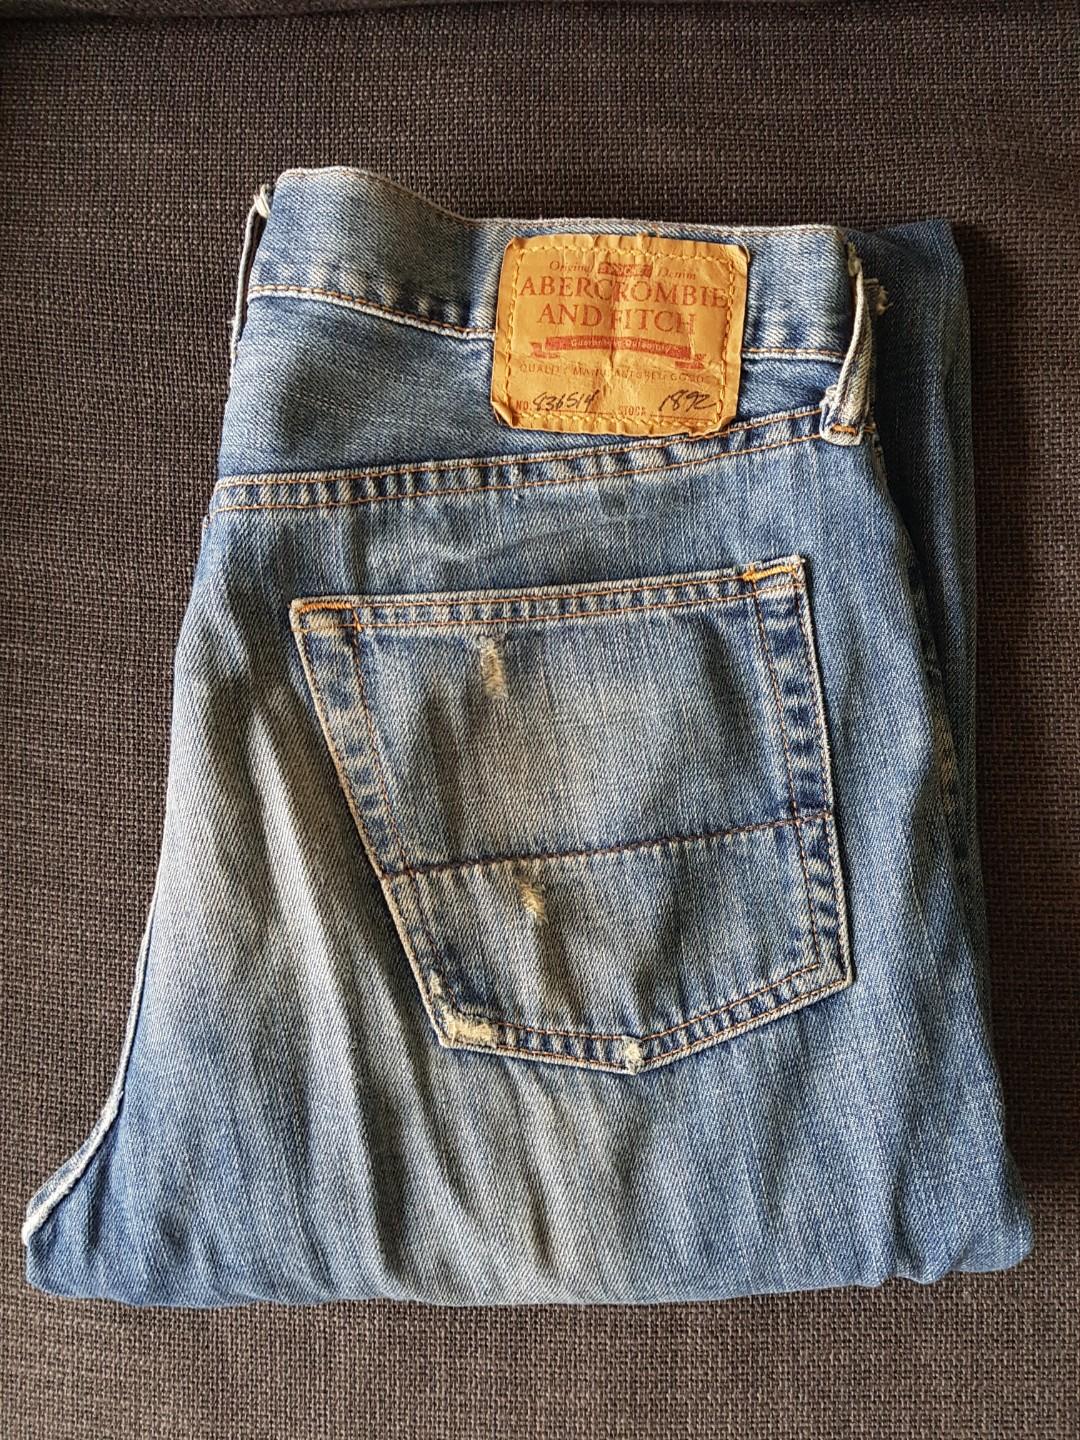 Abercrombie \u0026 Fitch jeans, Men's 